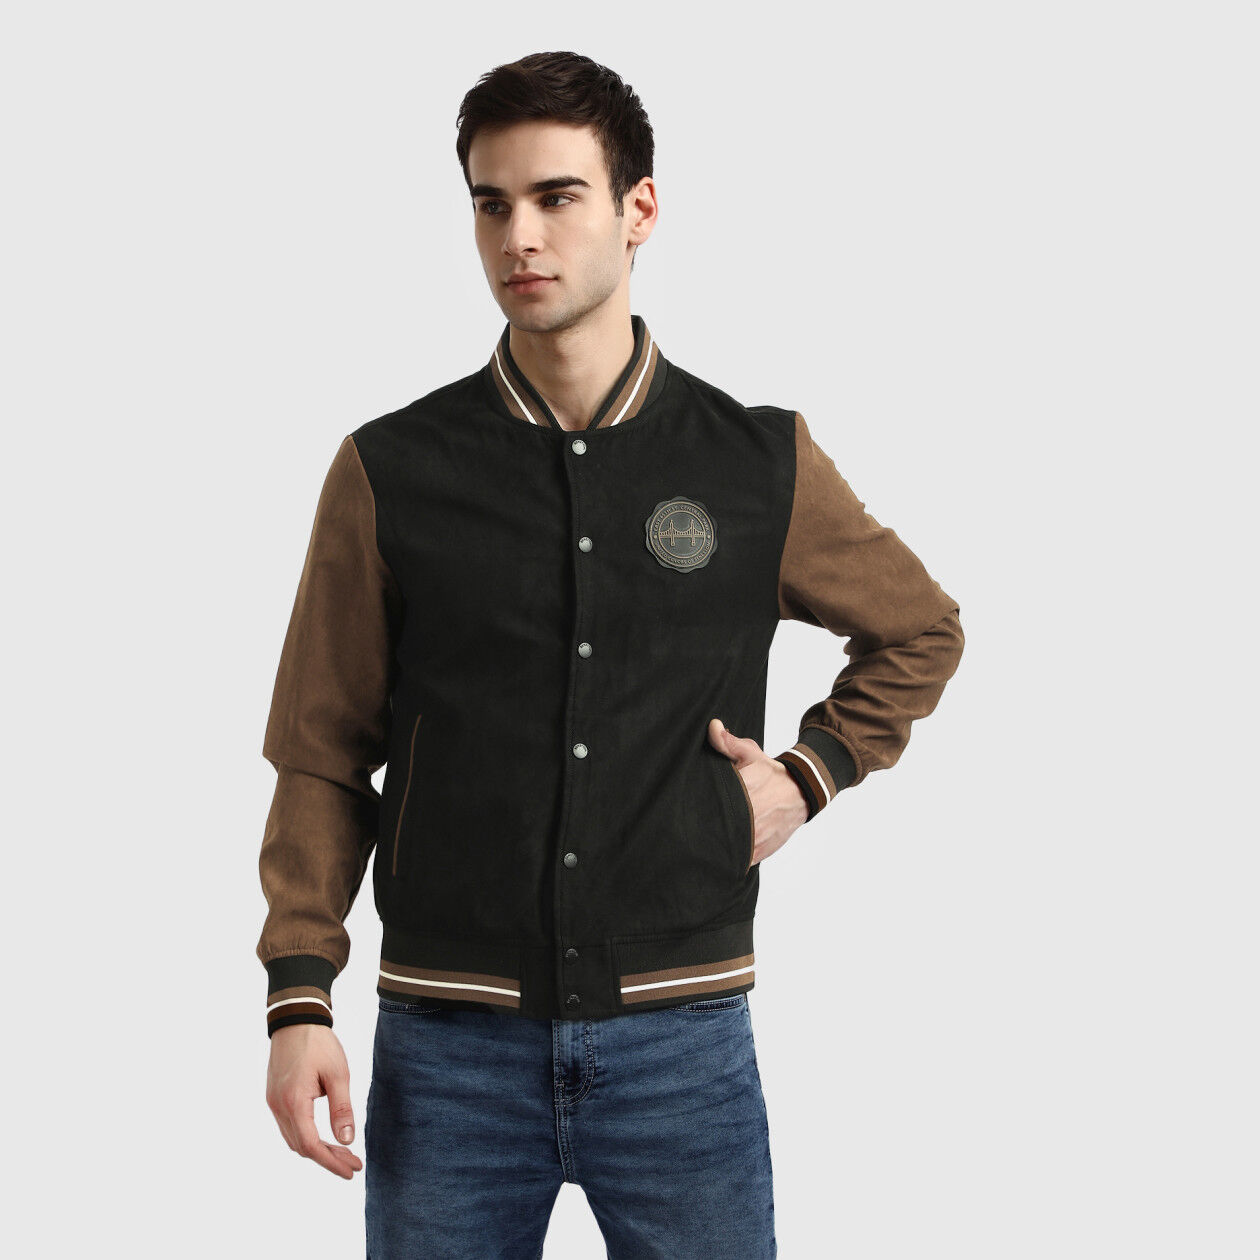 Drake Suede Leather Varsity Jacket - USA Leather Factory